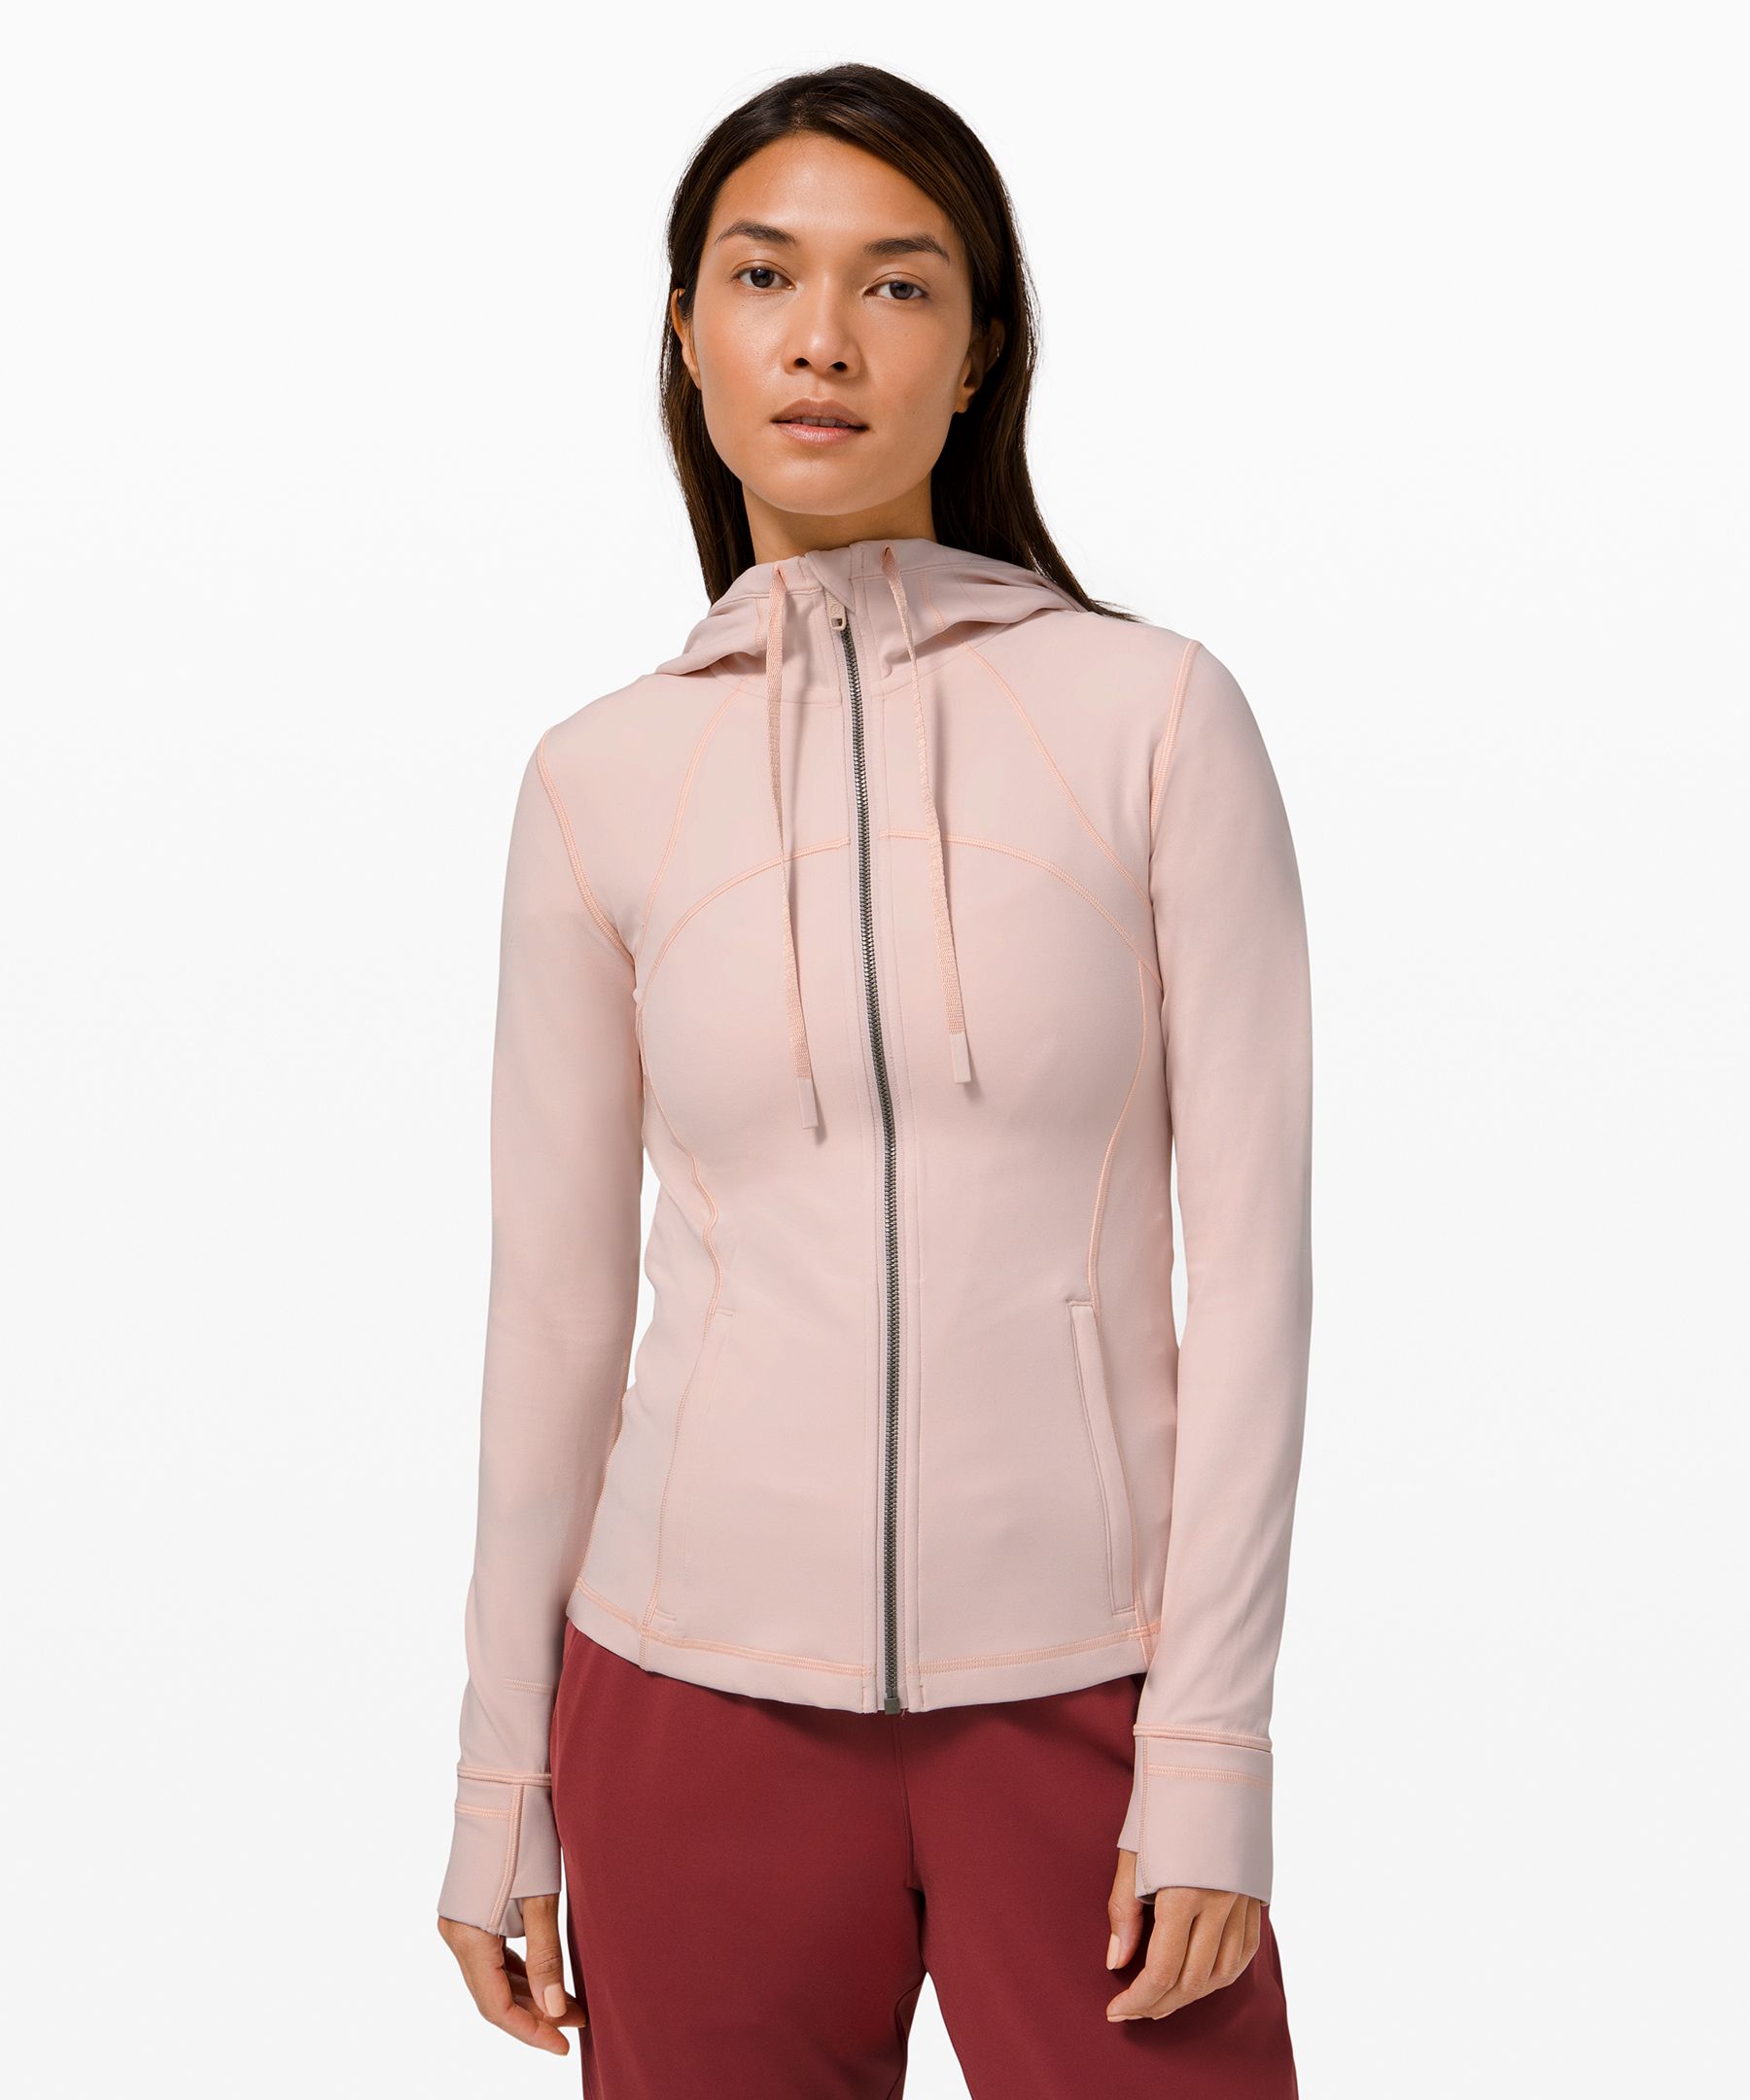 lululemon zipper jacket